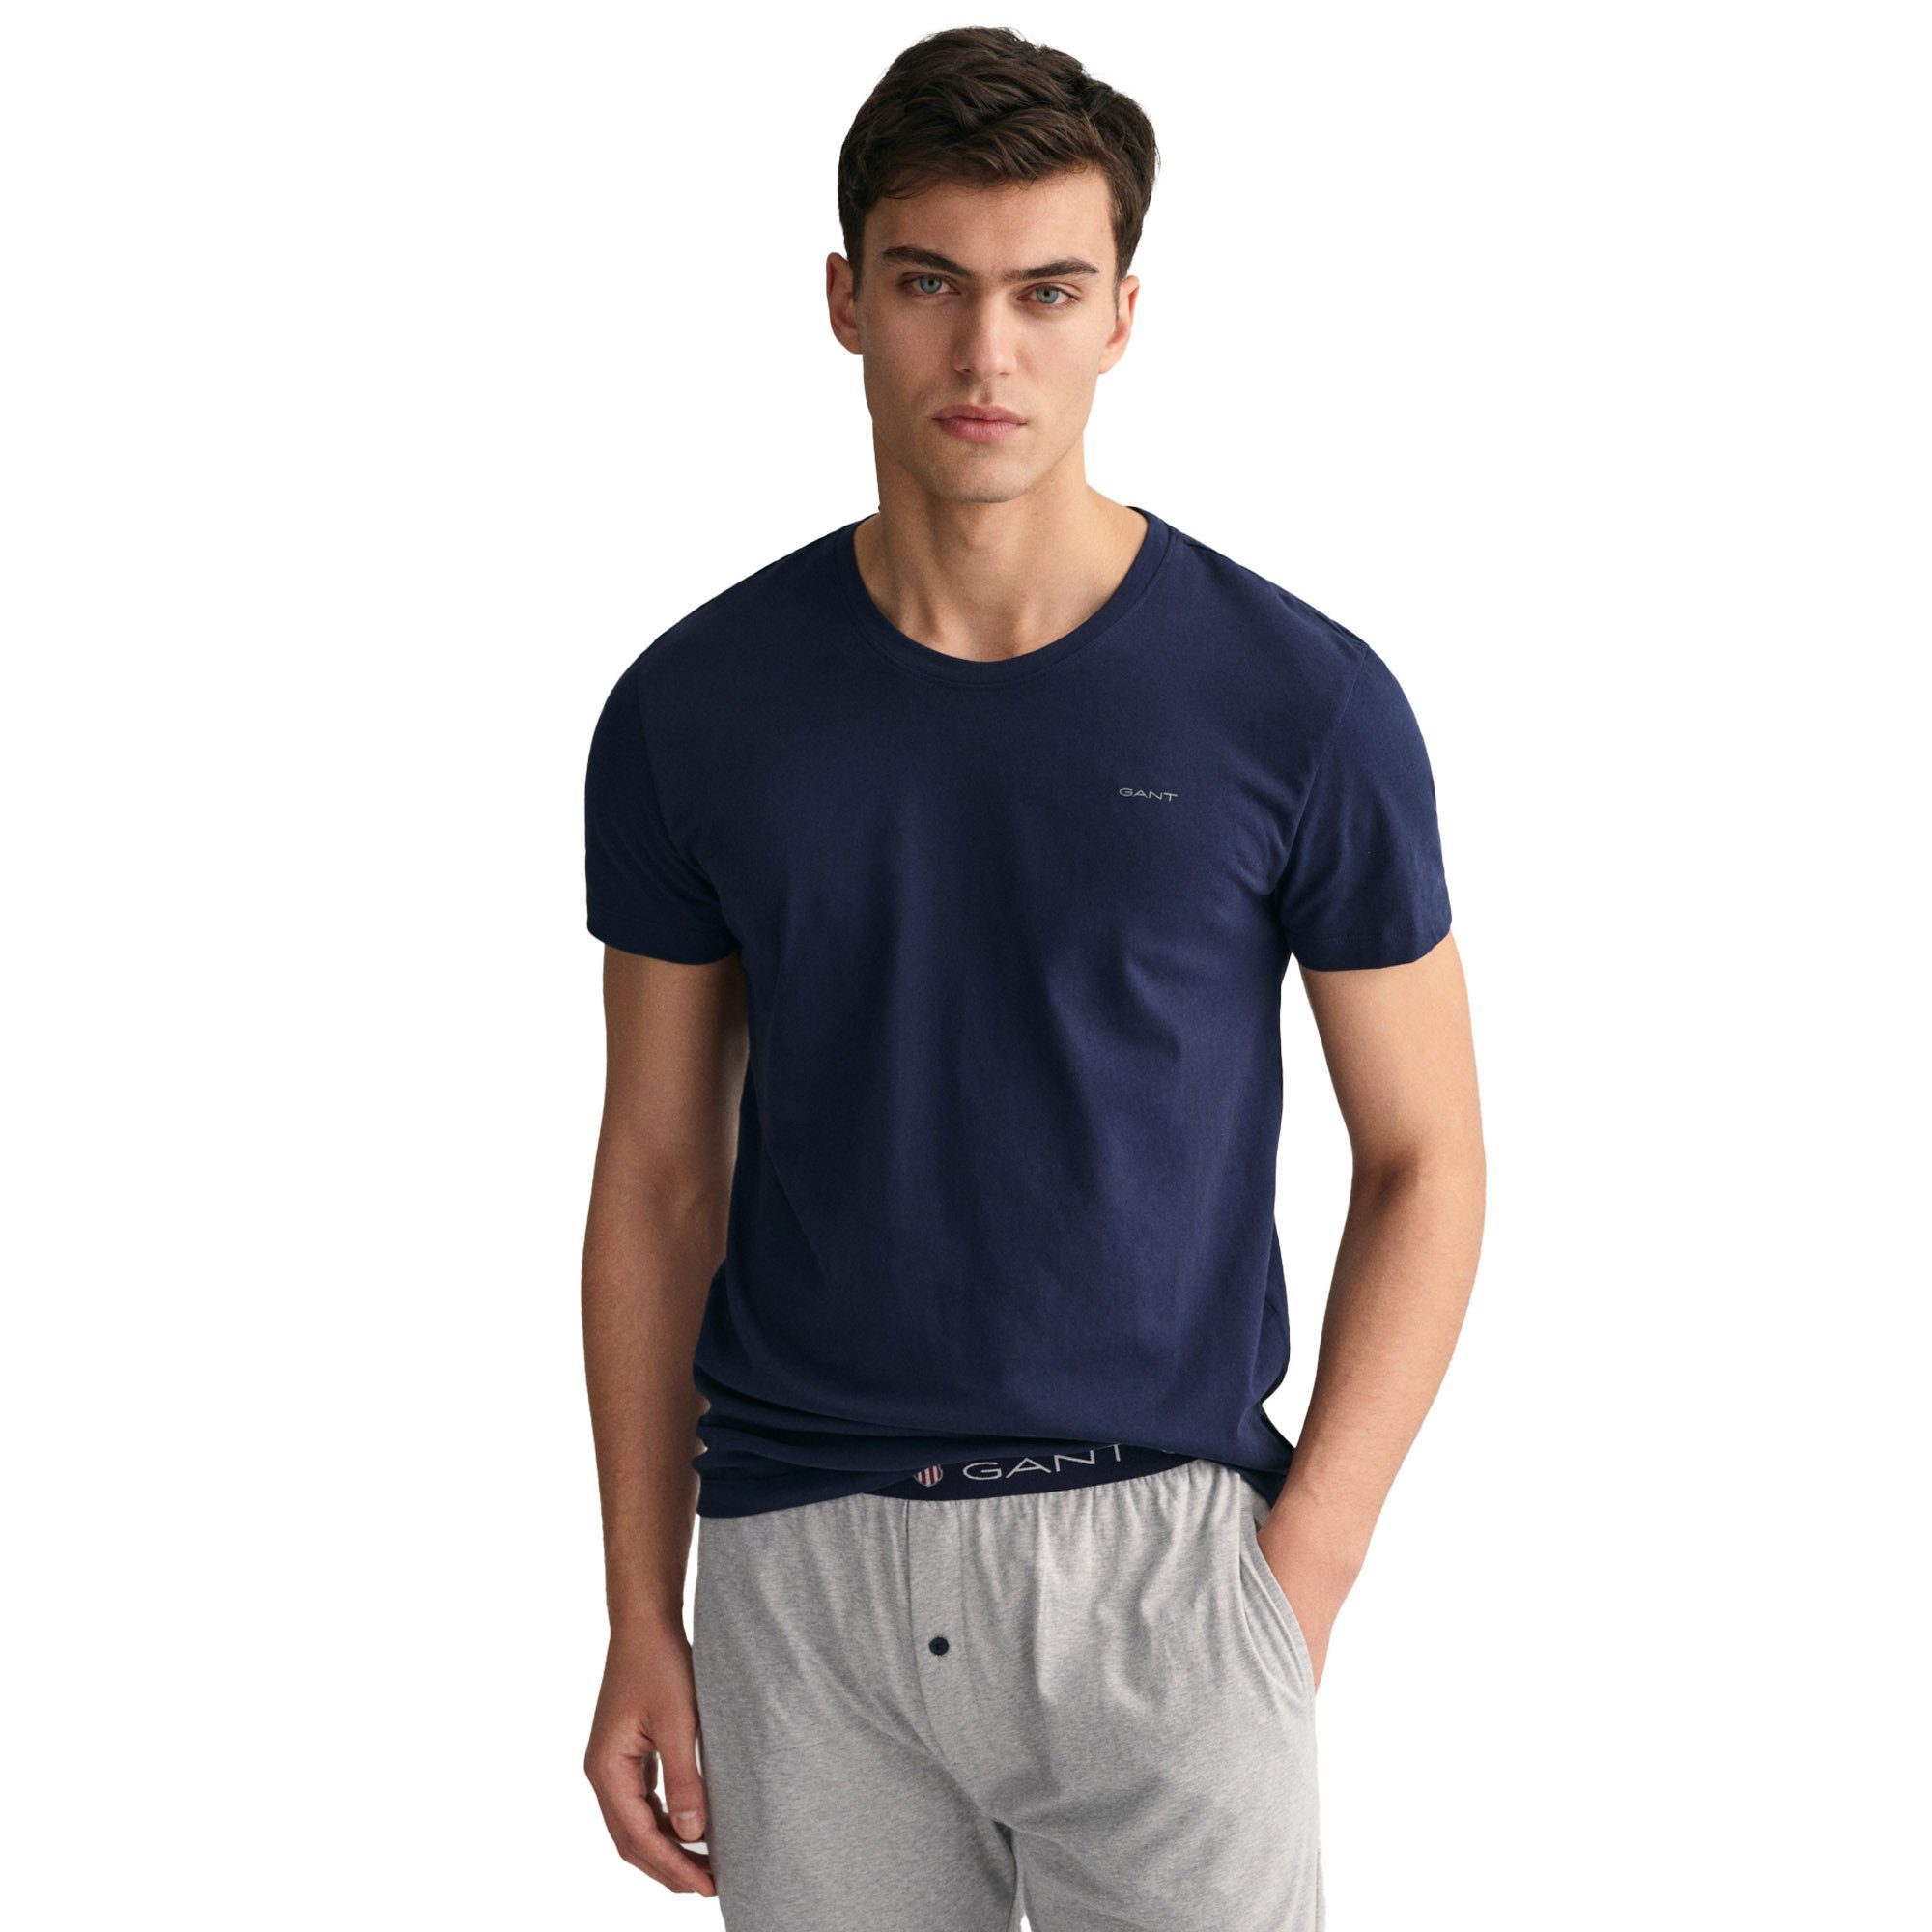 Herren T-SHIRT T-Shirt - 2er Pack 2-PACK Marineblau/Weiß T-Shirt, Gant C-NECK